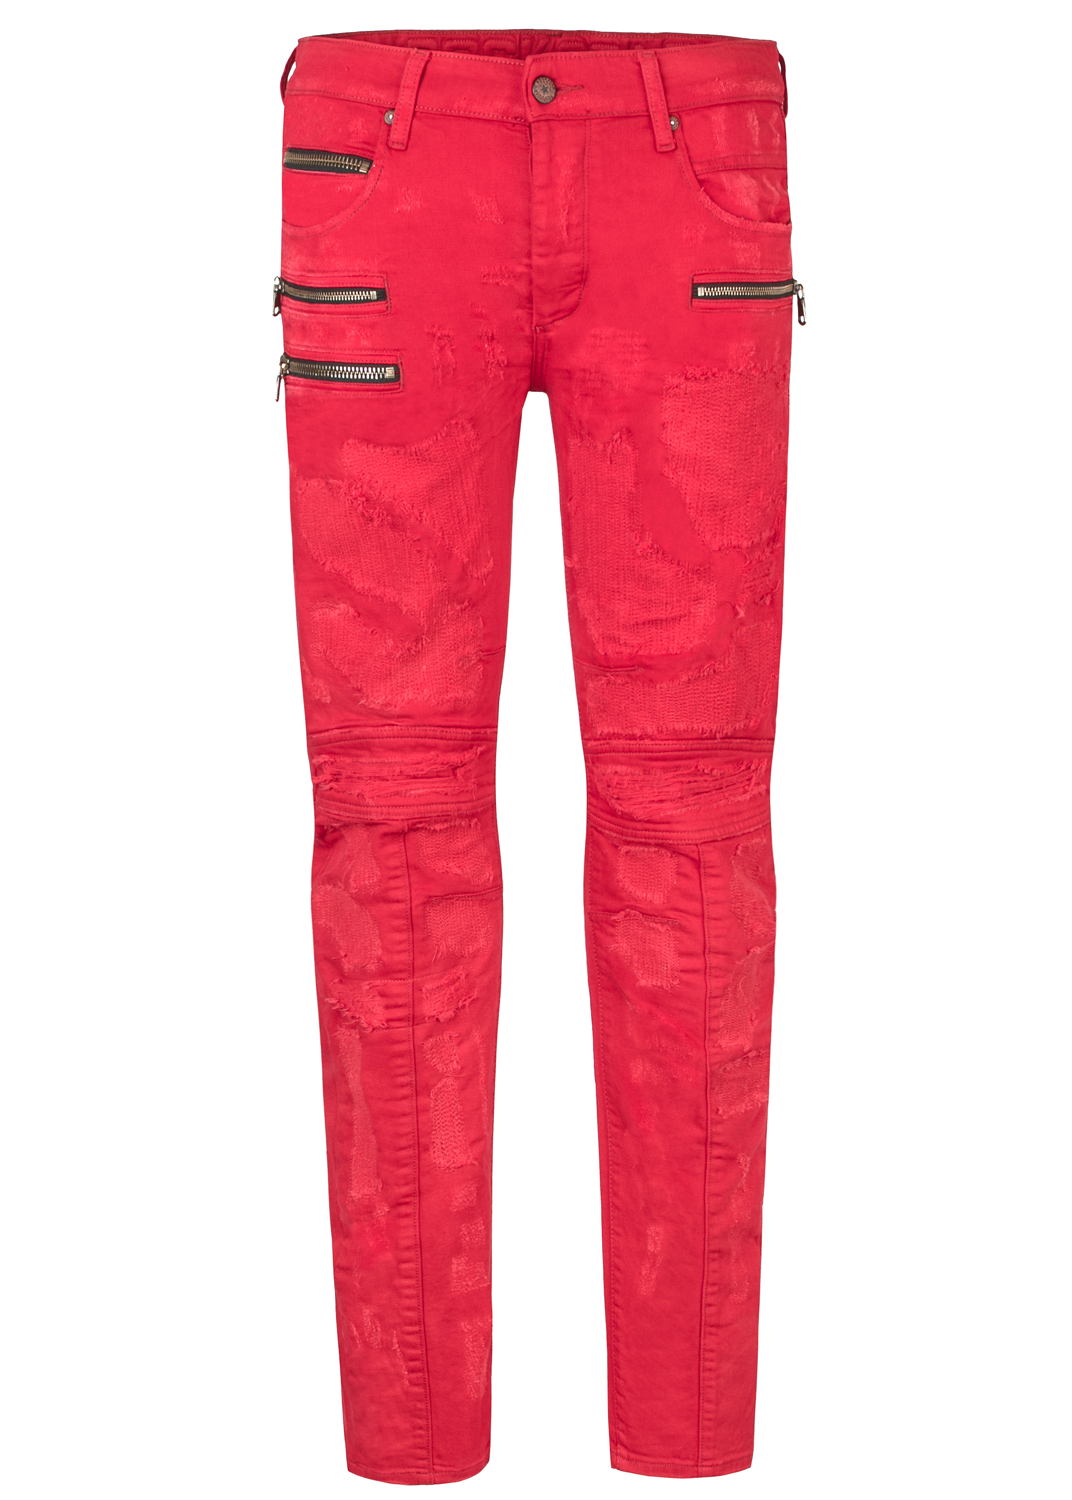 red rockstar jeans